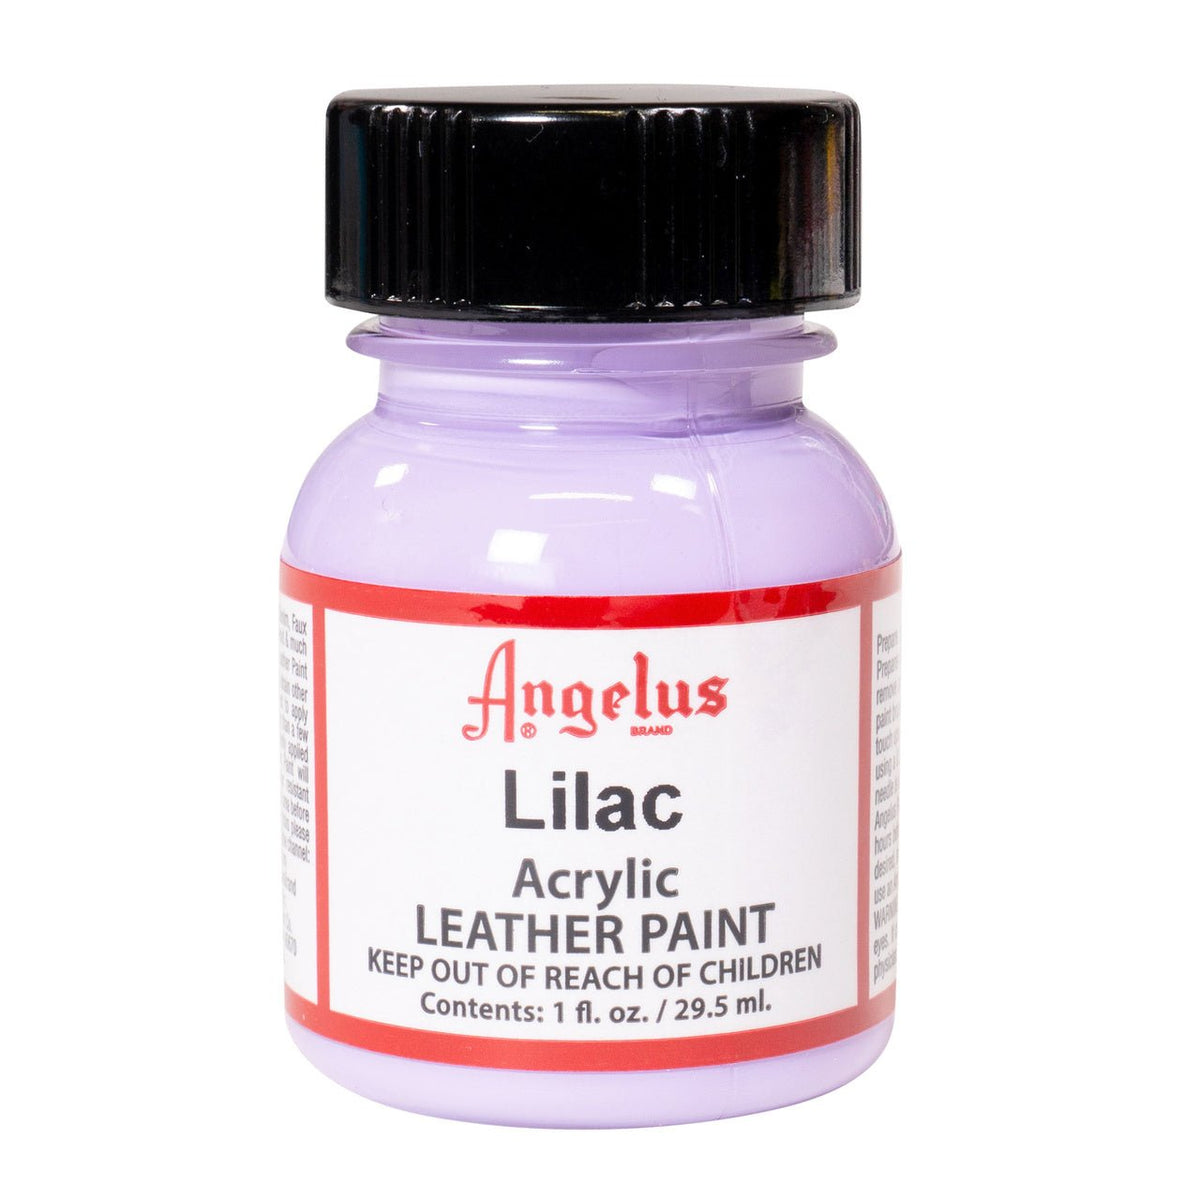 Angelus Acrylic Leather Paint - 1 oz. Bottle - Lilac - merriartist.com